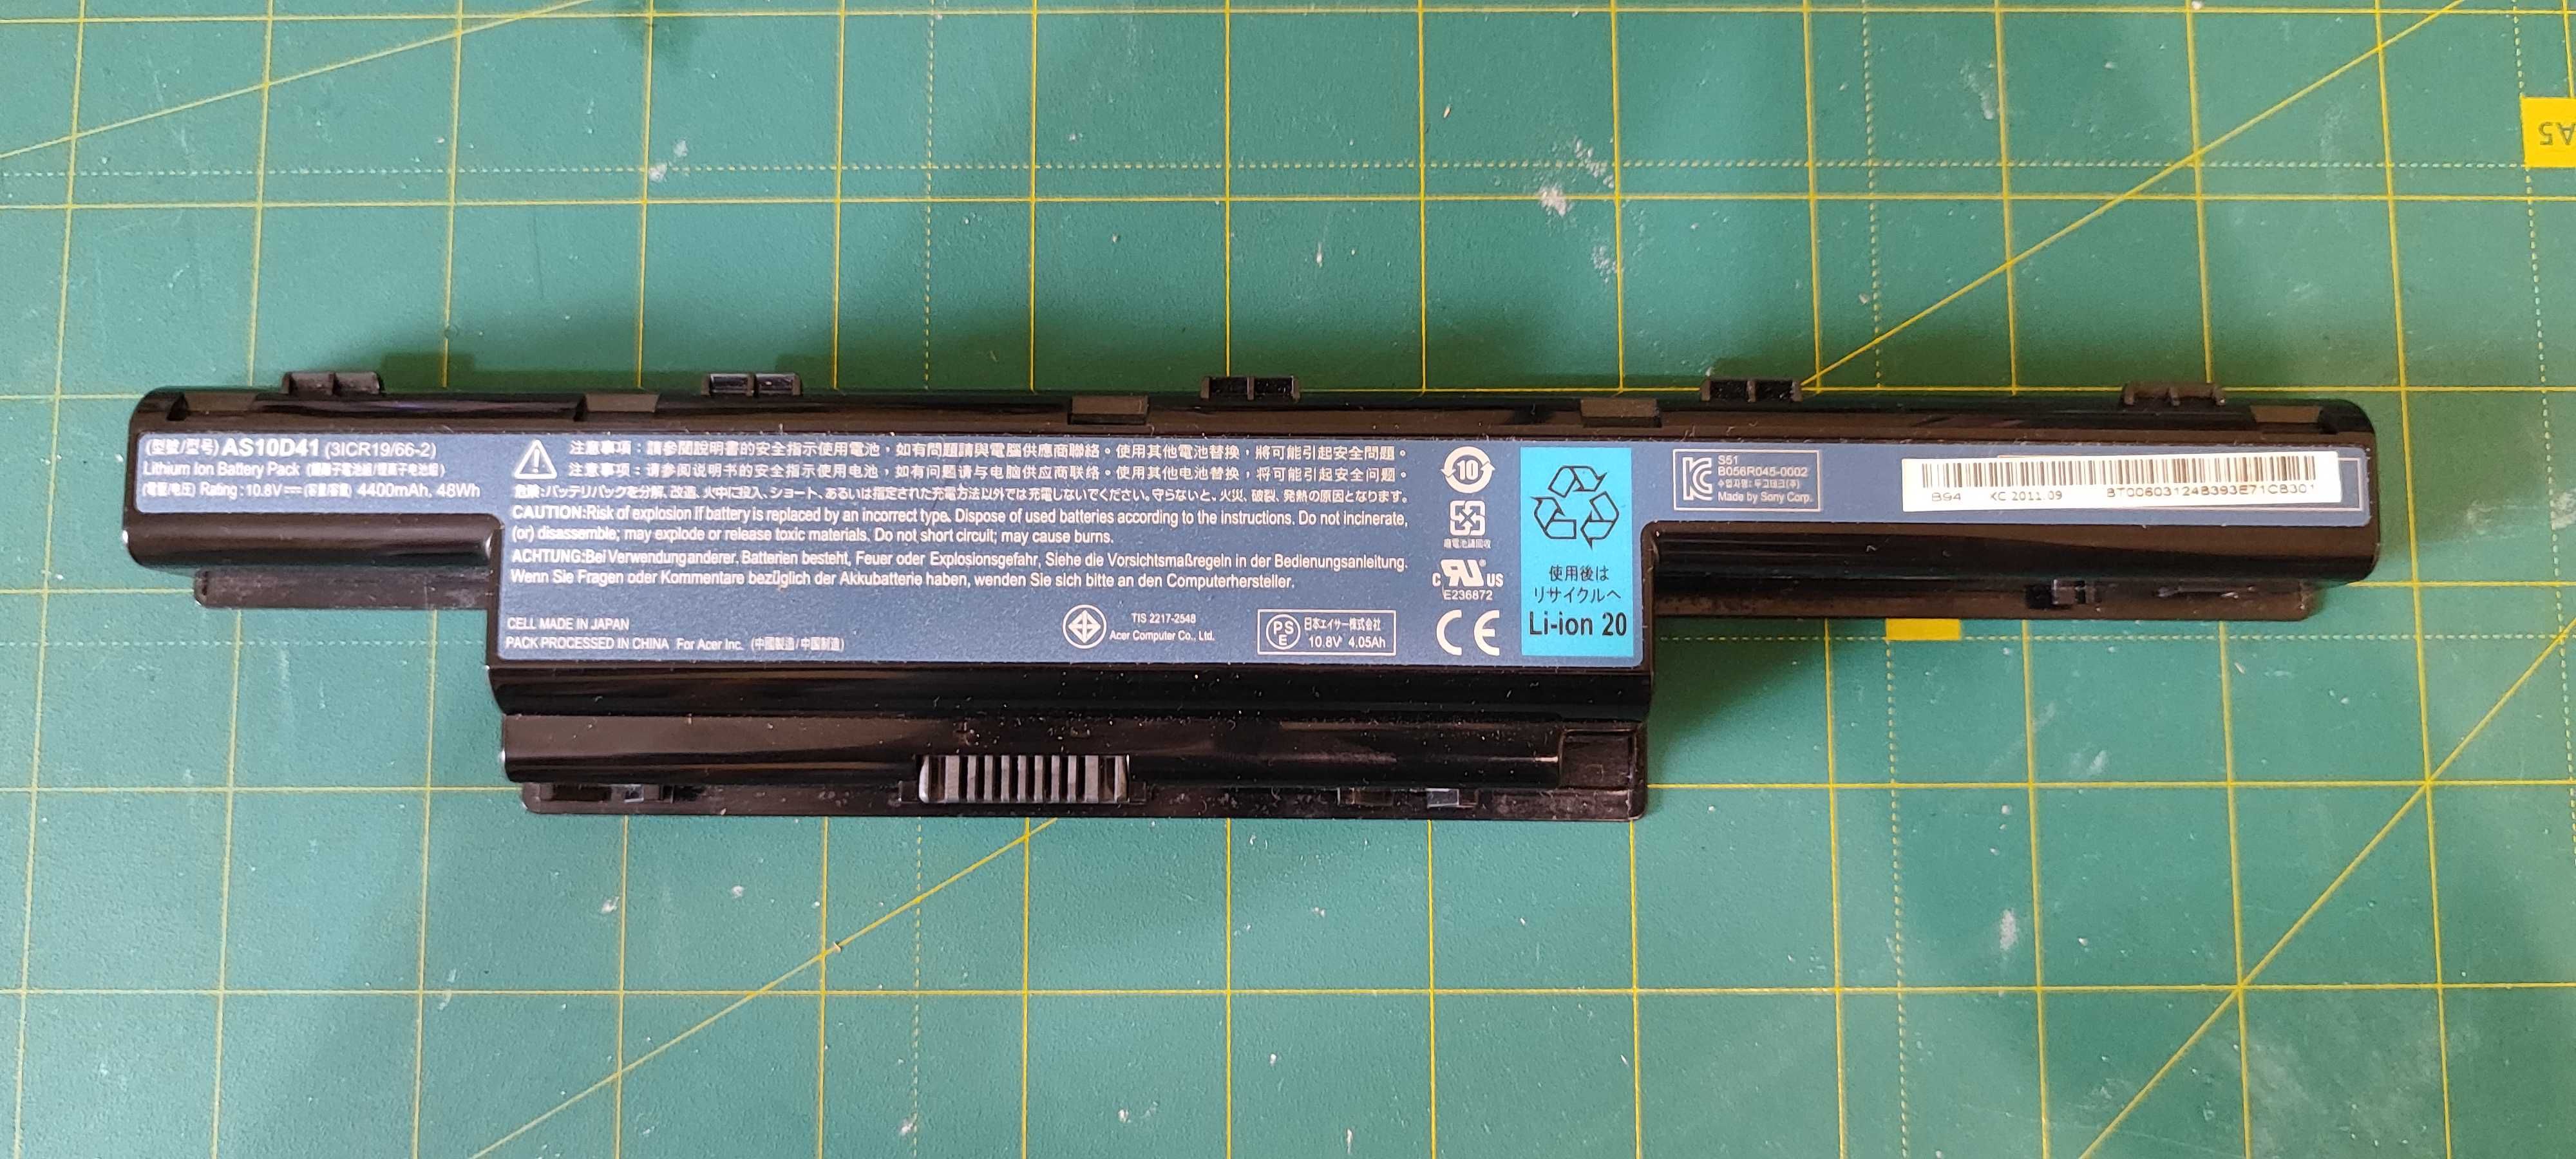 Акумуляторна батарея AS10D41 Acer 5750g справна зношена на 50%